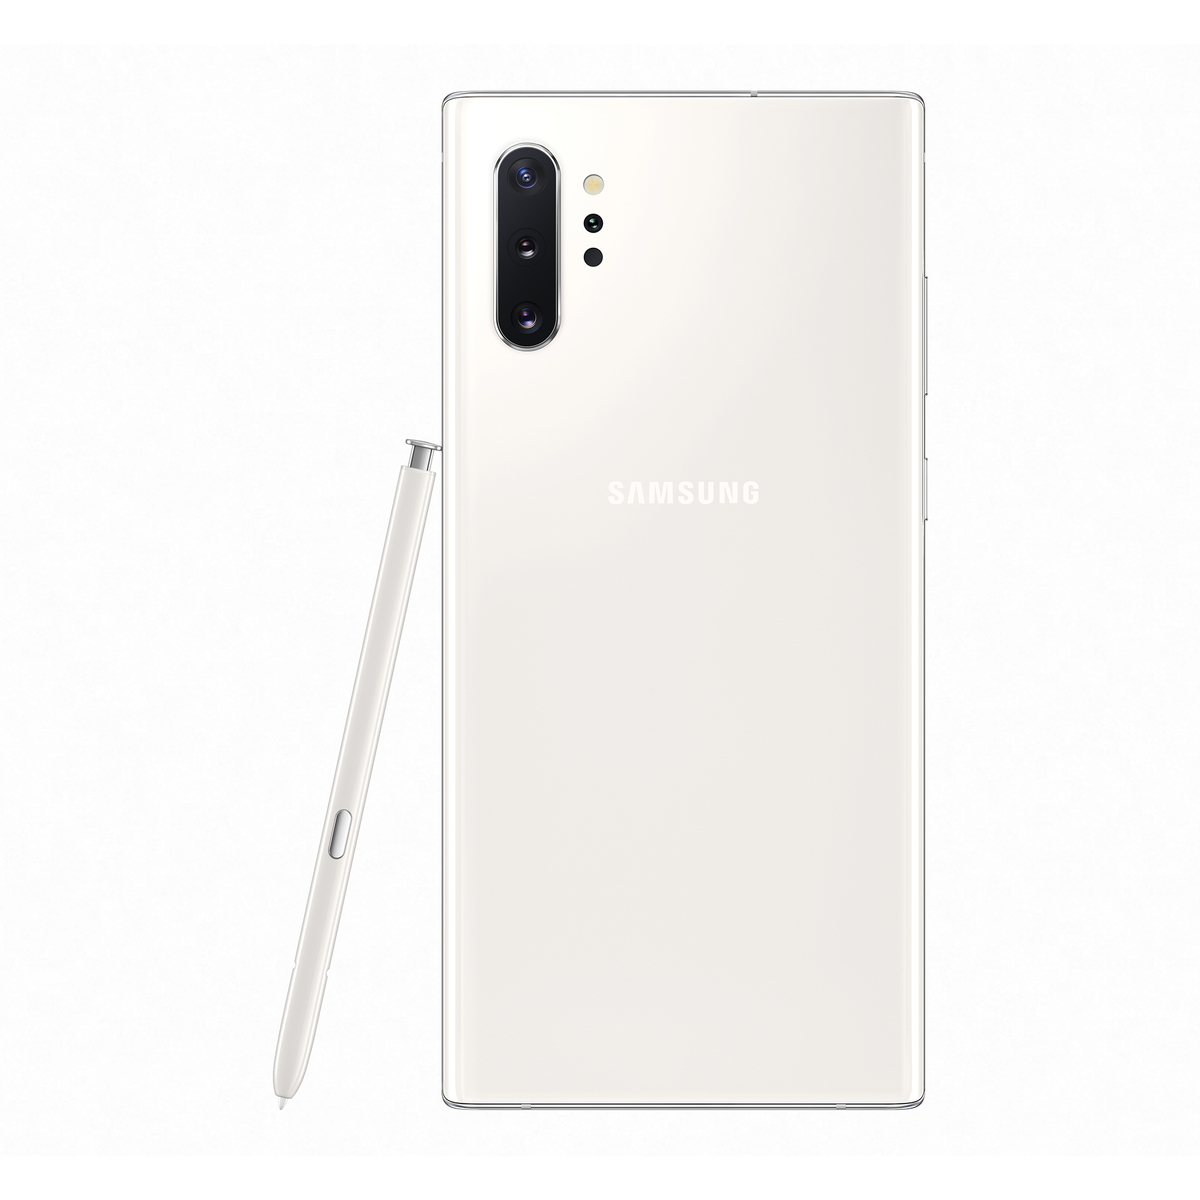 Samsung Galaxy Note10+ SMN975F 512GB Aura White